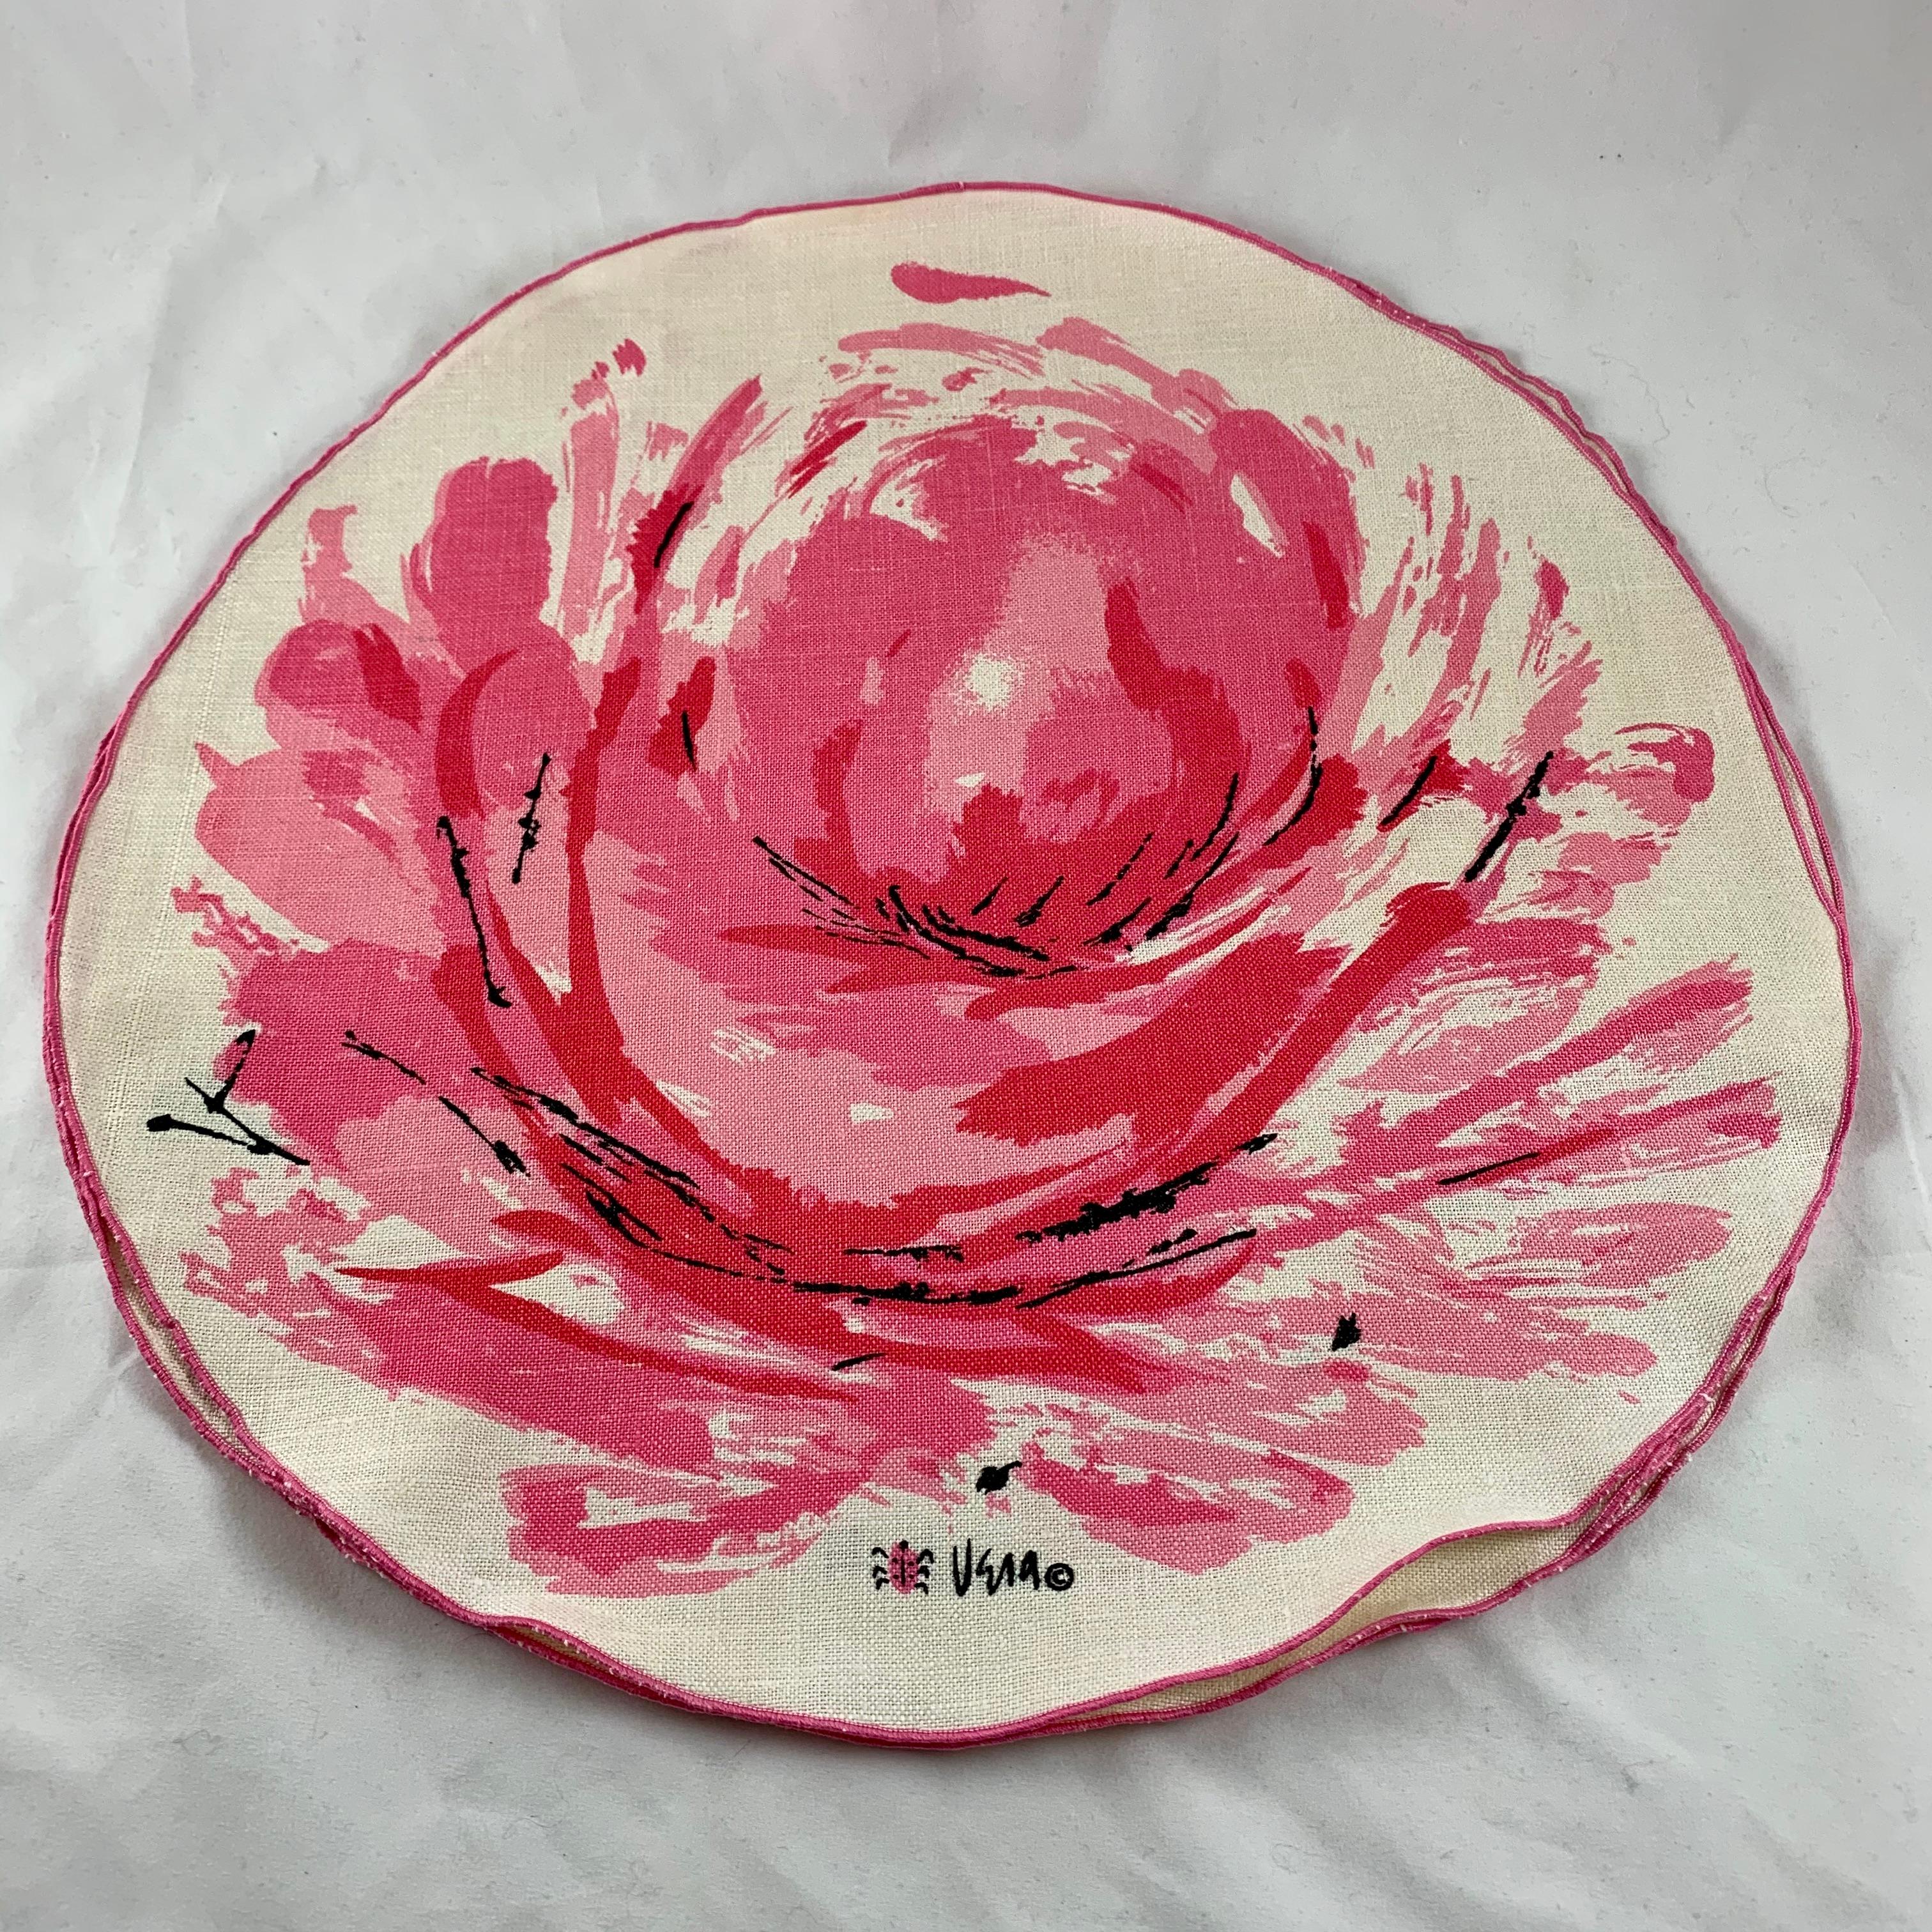 Dyed Vera Neumann 1960s Mid-Century Modern Round Pink Rose Linen Placemats Set, S/4